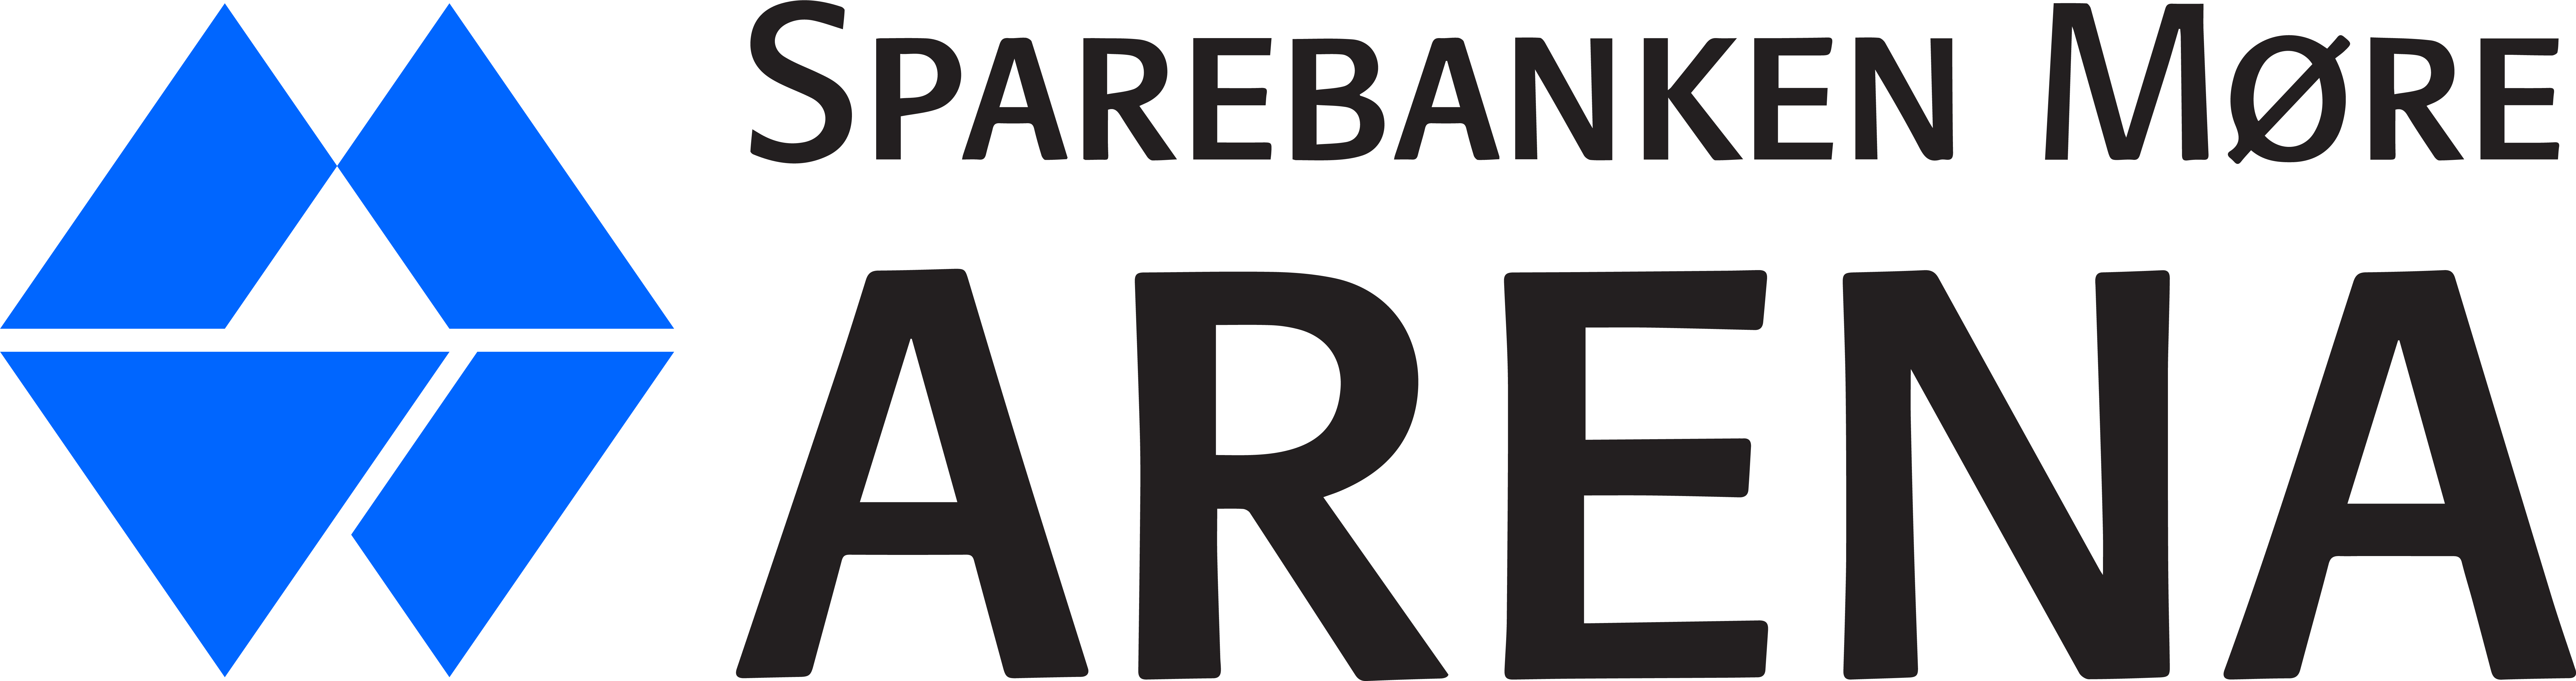 Sparebanken Møre Arena logo